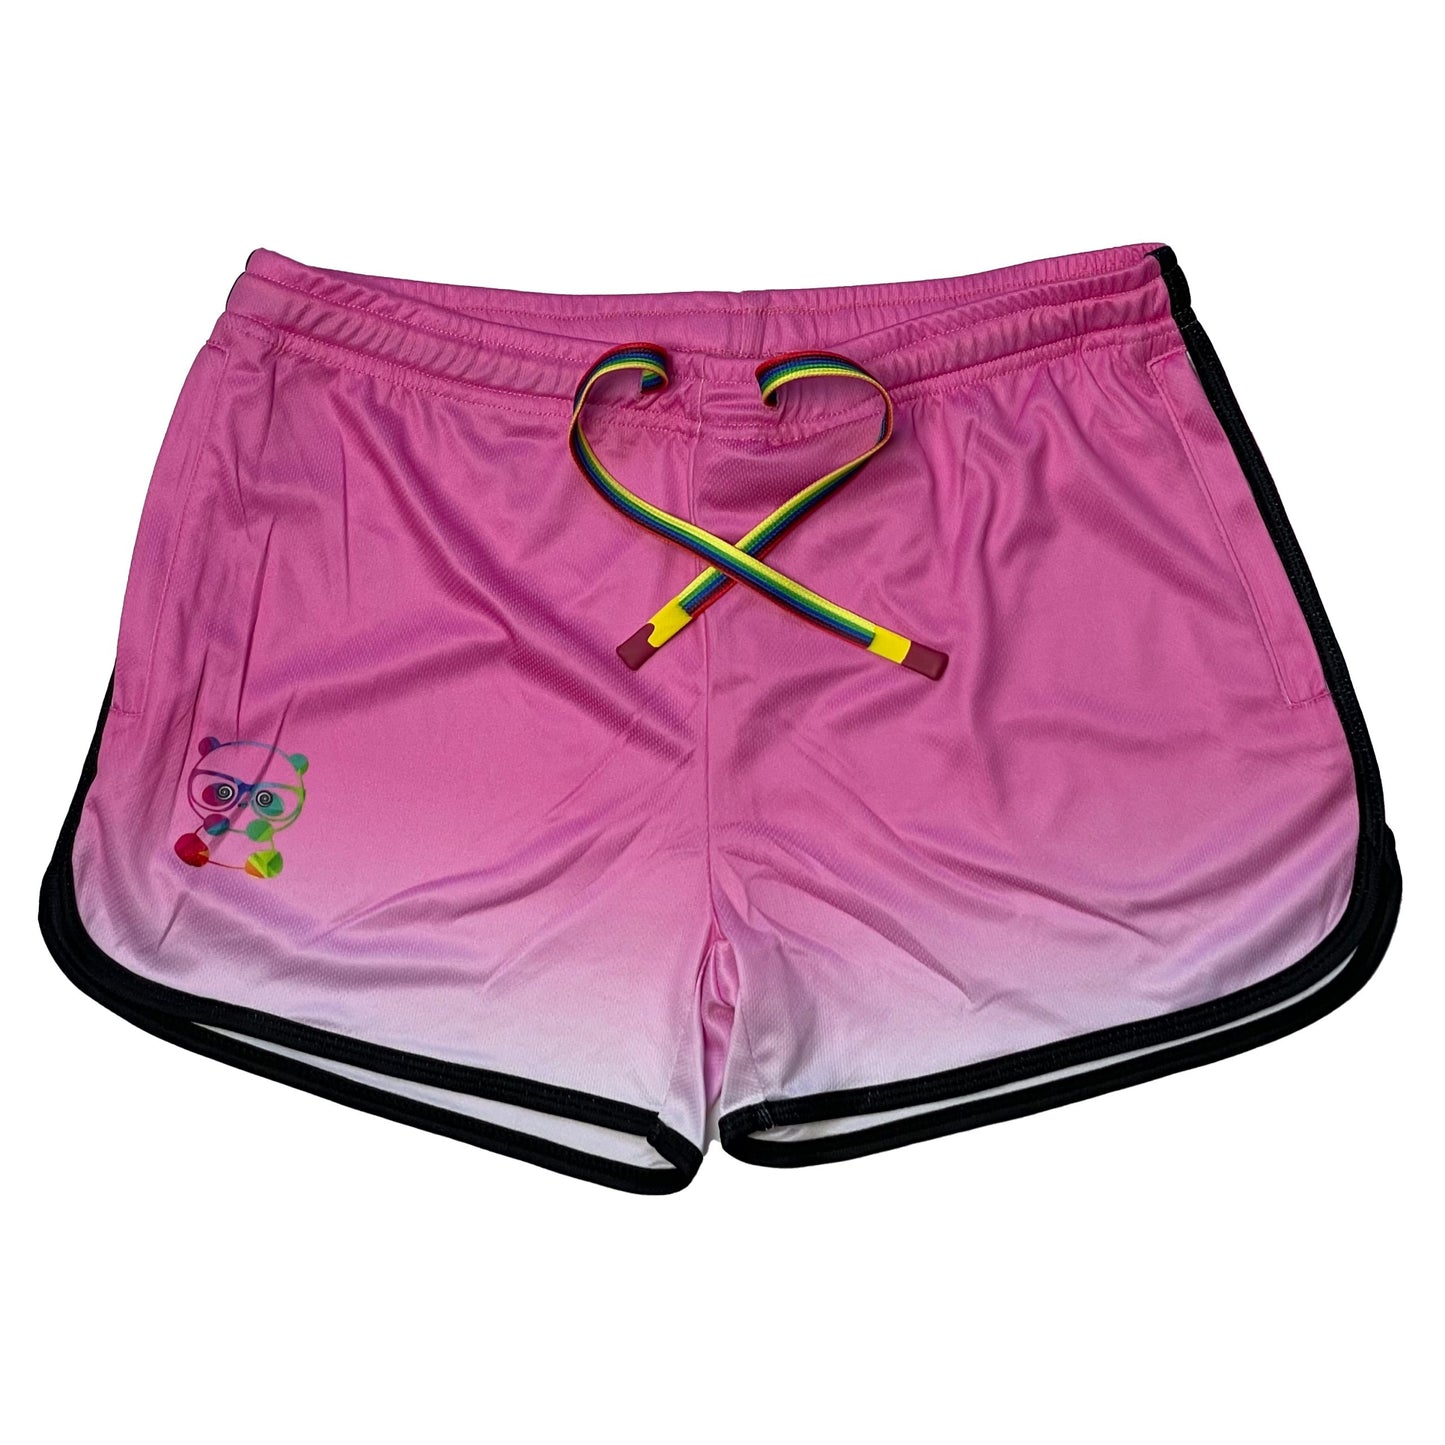 The "VPL" Party Shorts - Ombré Pink